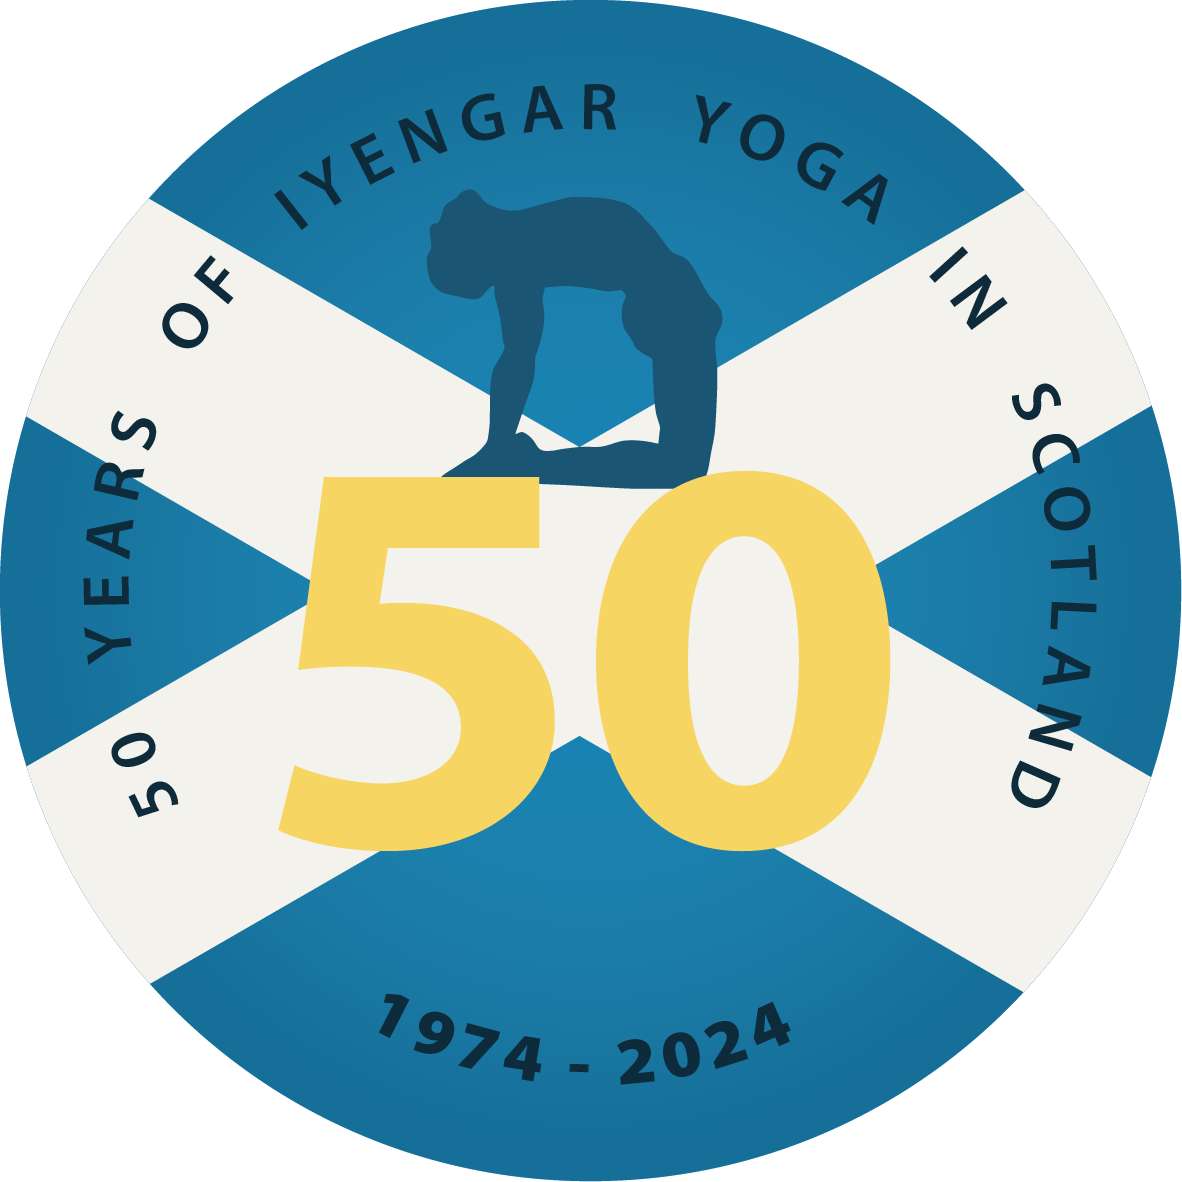 Celebrating 50 years of Iyengar Yoga in Scotland.